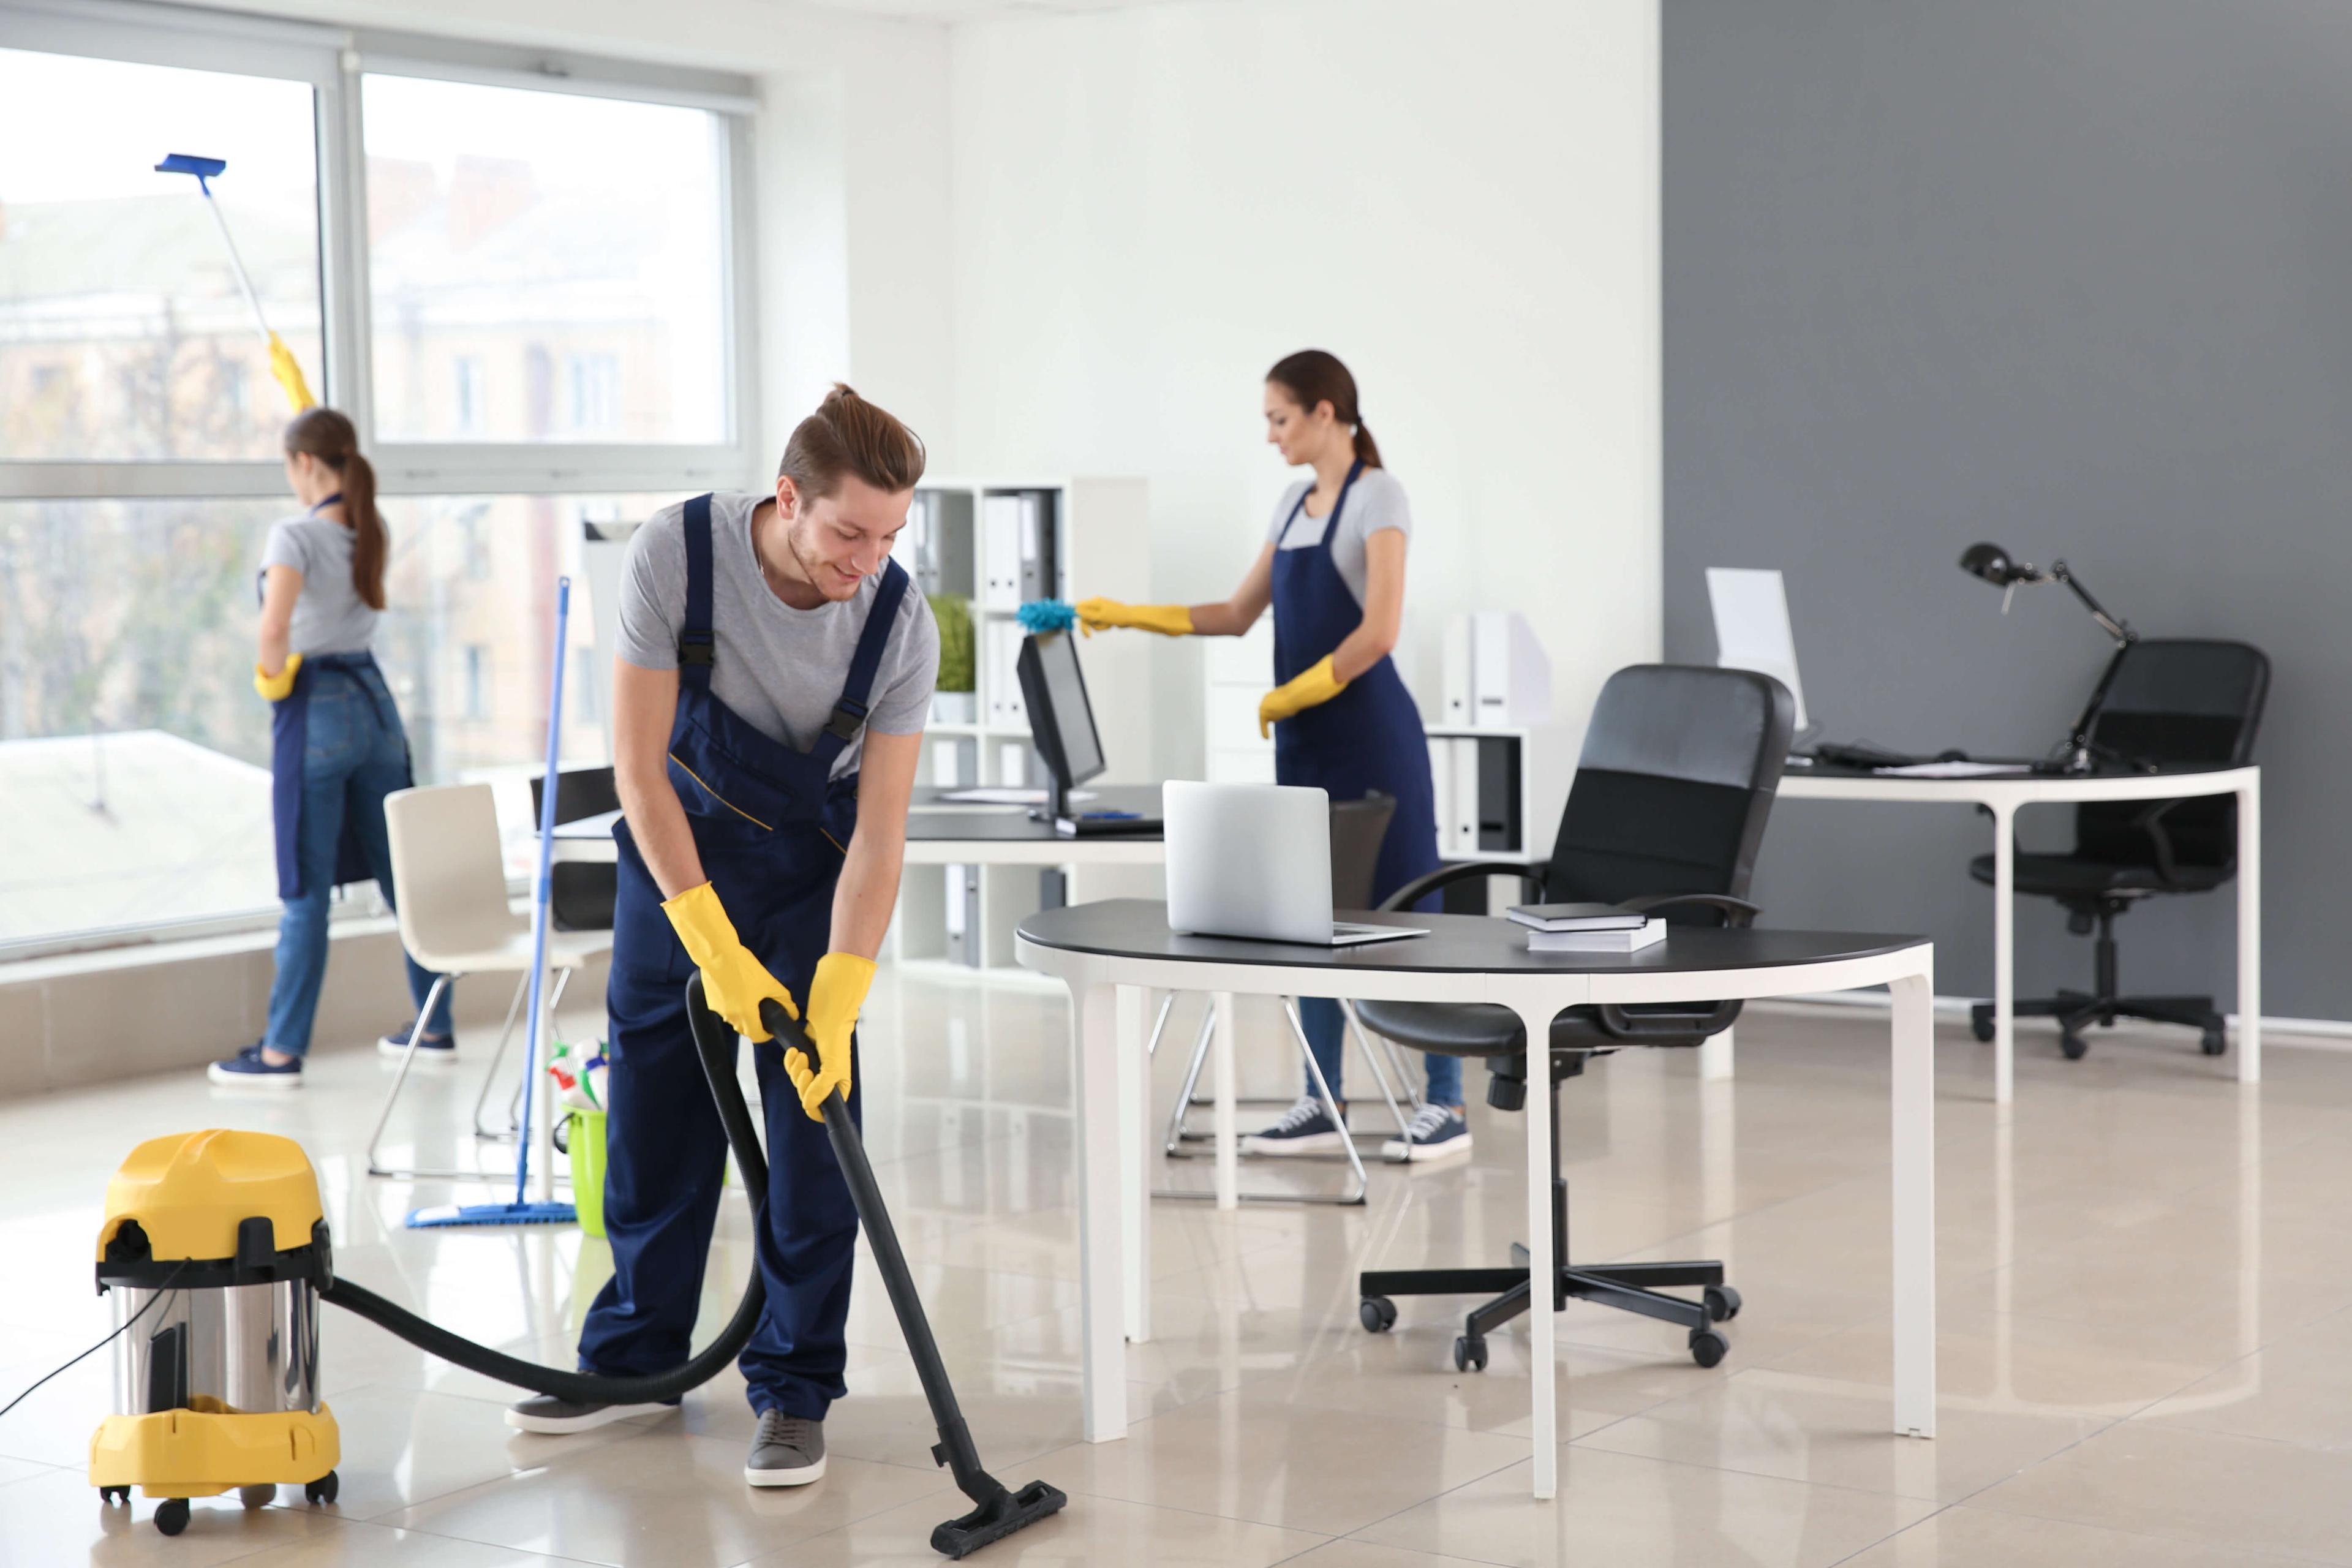 BSC cleaning team working in office buiilding cleaning floors, windows, desks 